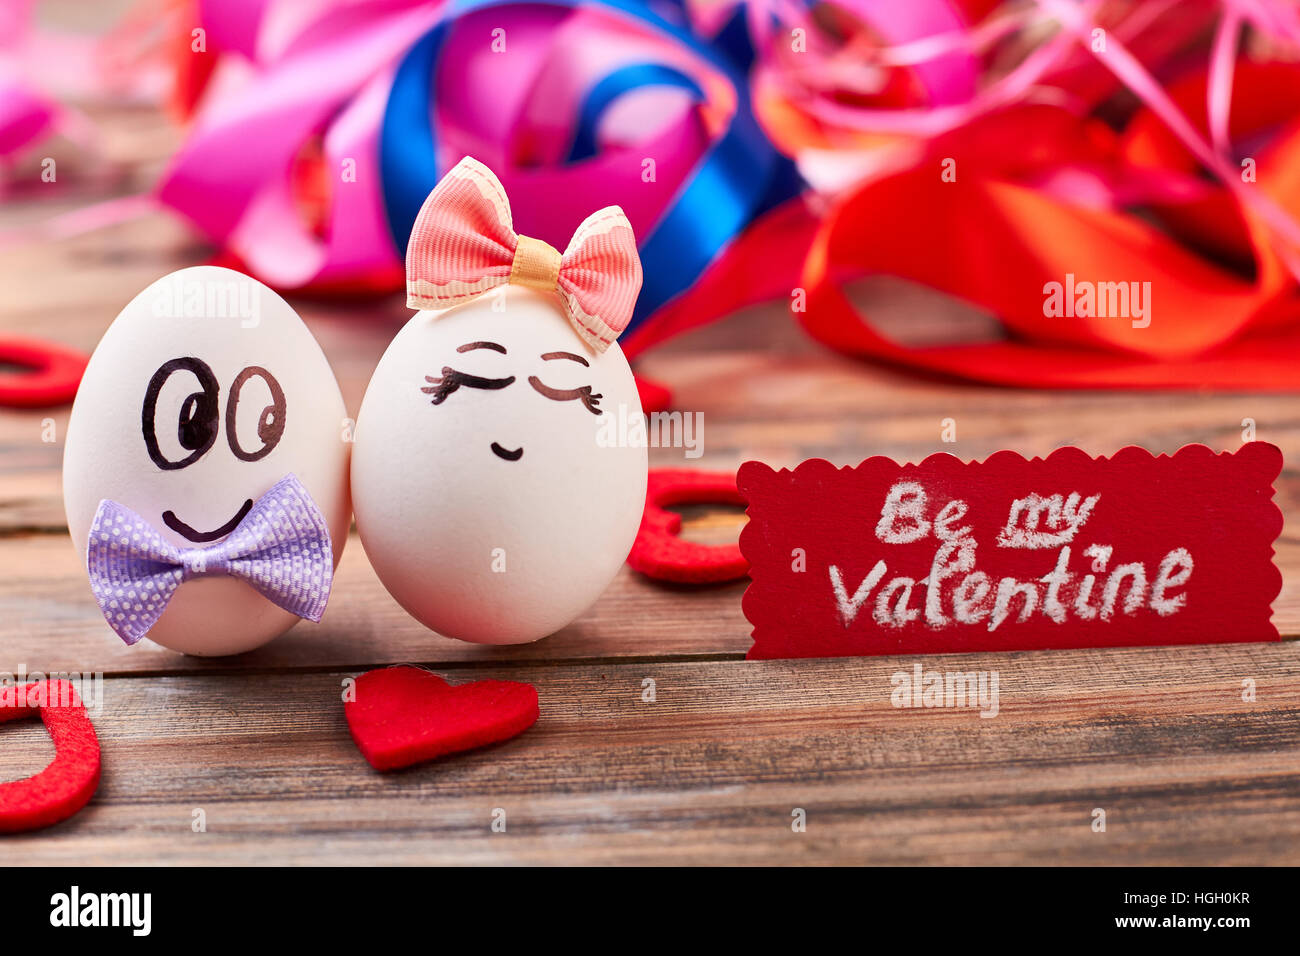 Be my Valentine card. Stock Photo